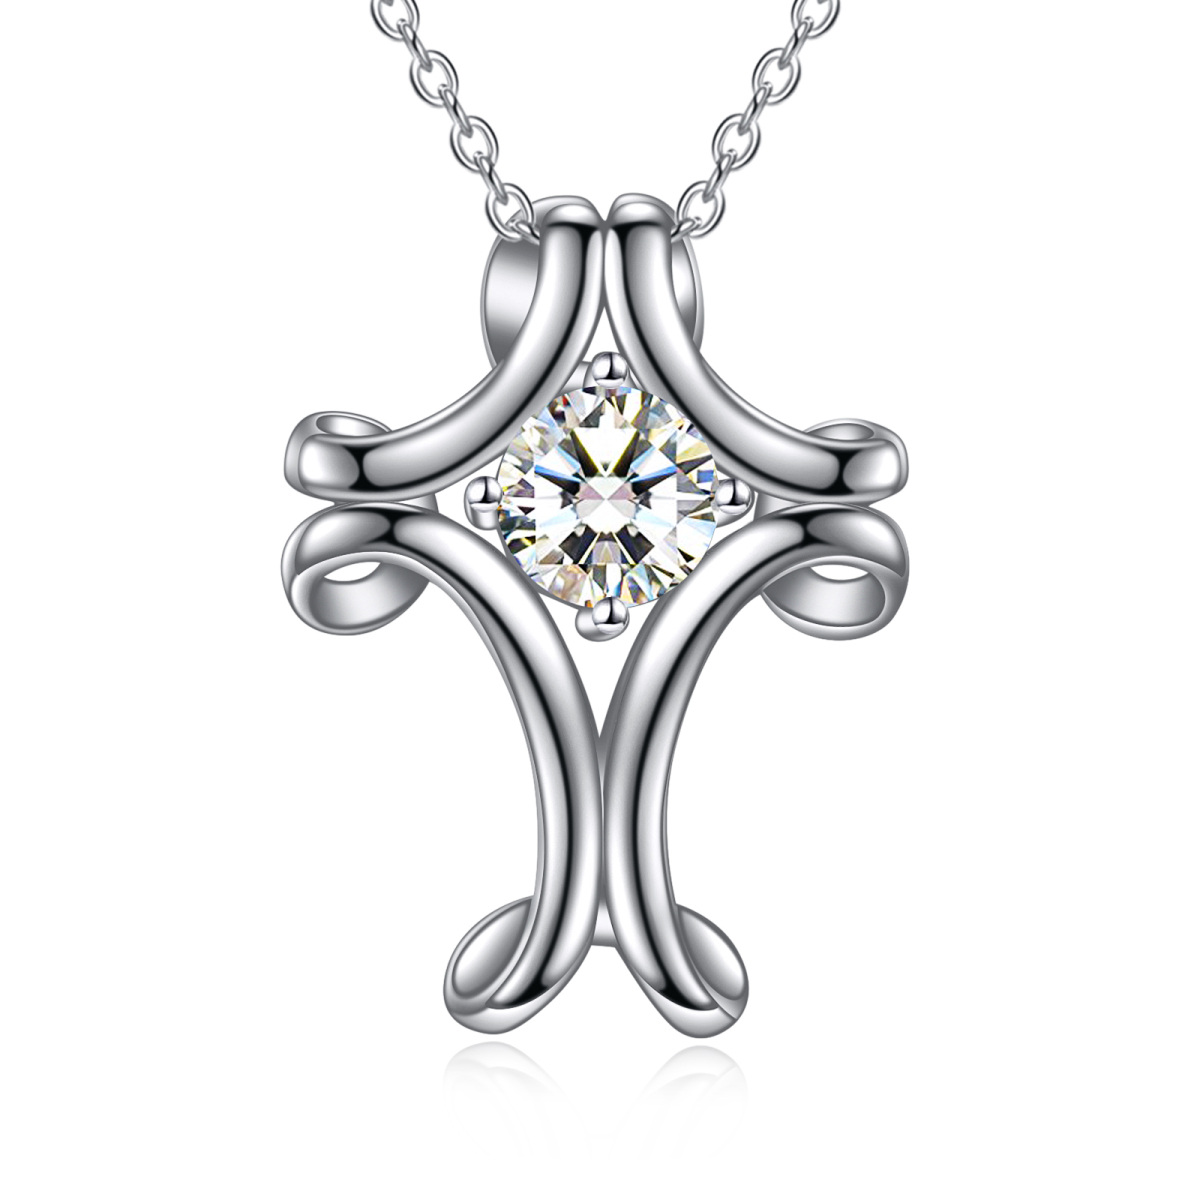 Sterling Silber Cubic Zirkonia Keltischer Knoten & Kreuz Anhänger Halskette-1